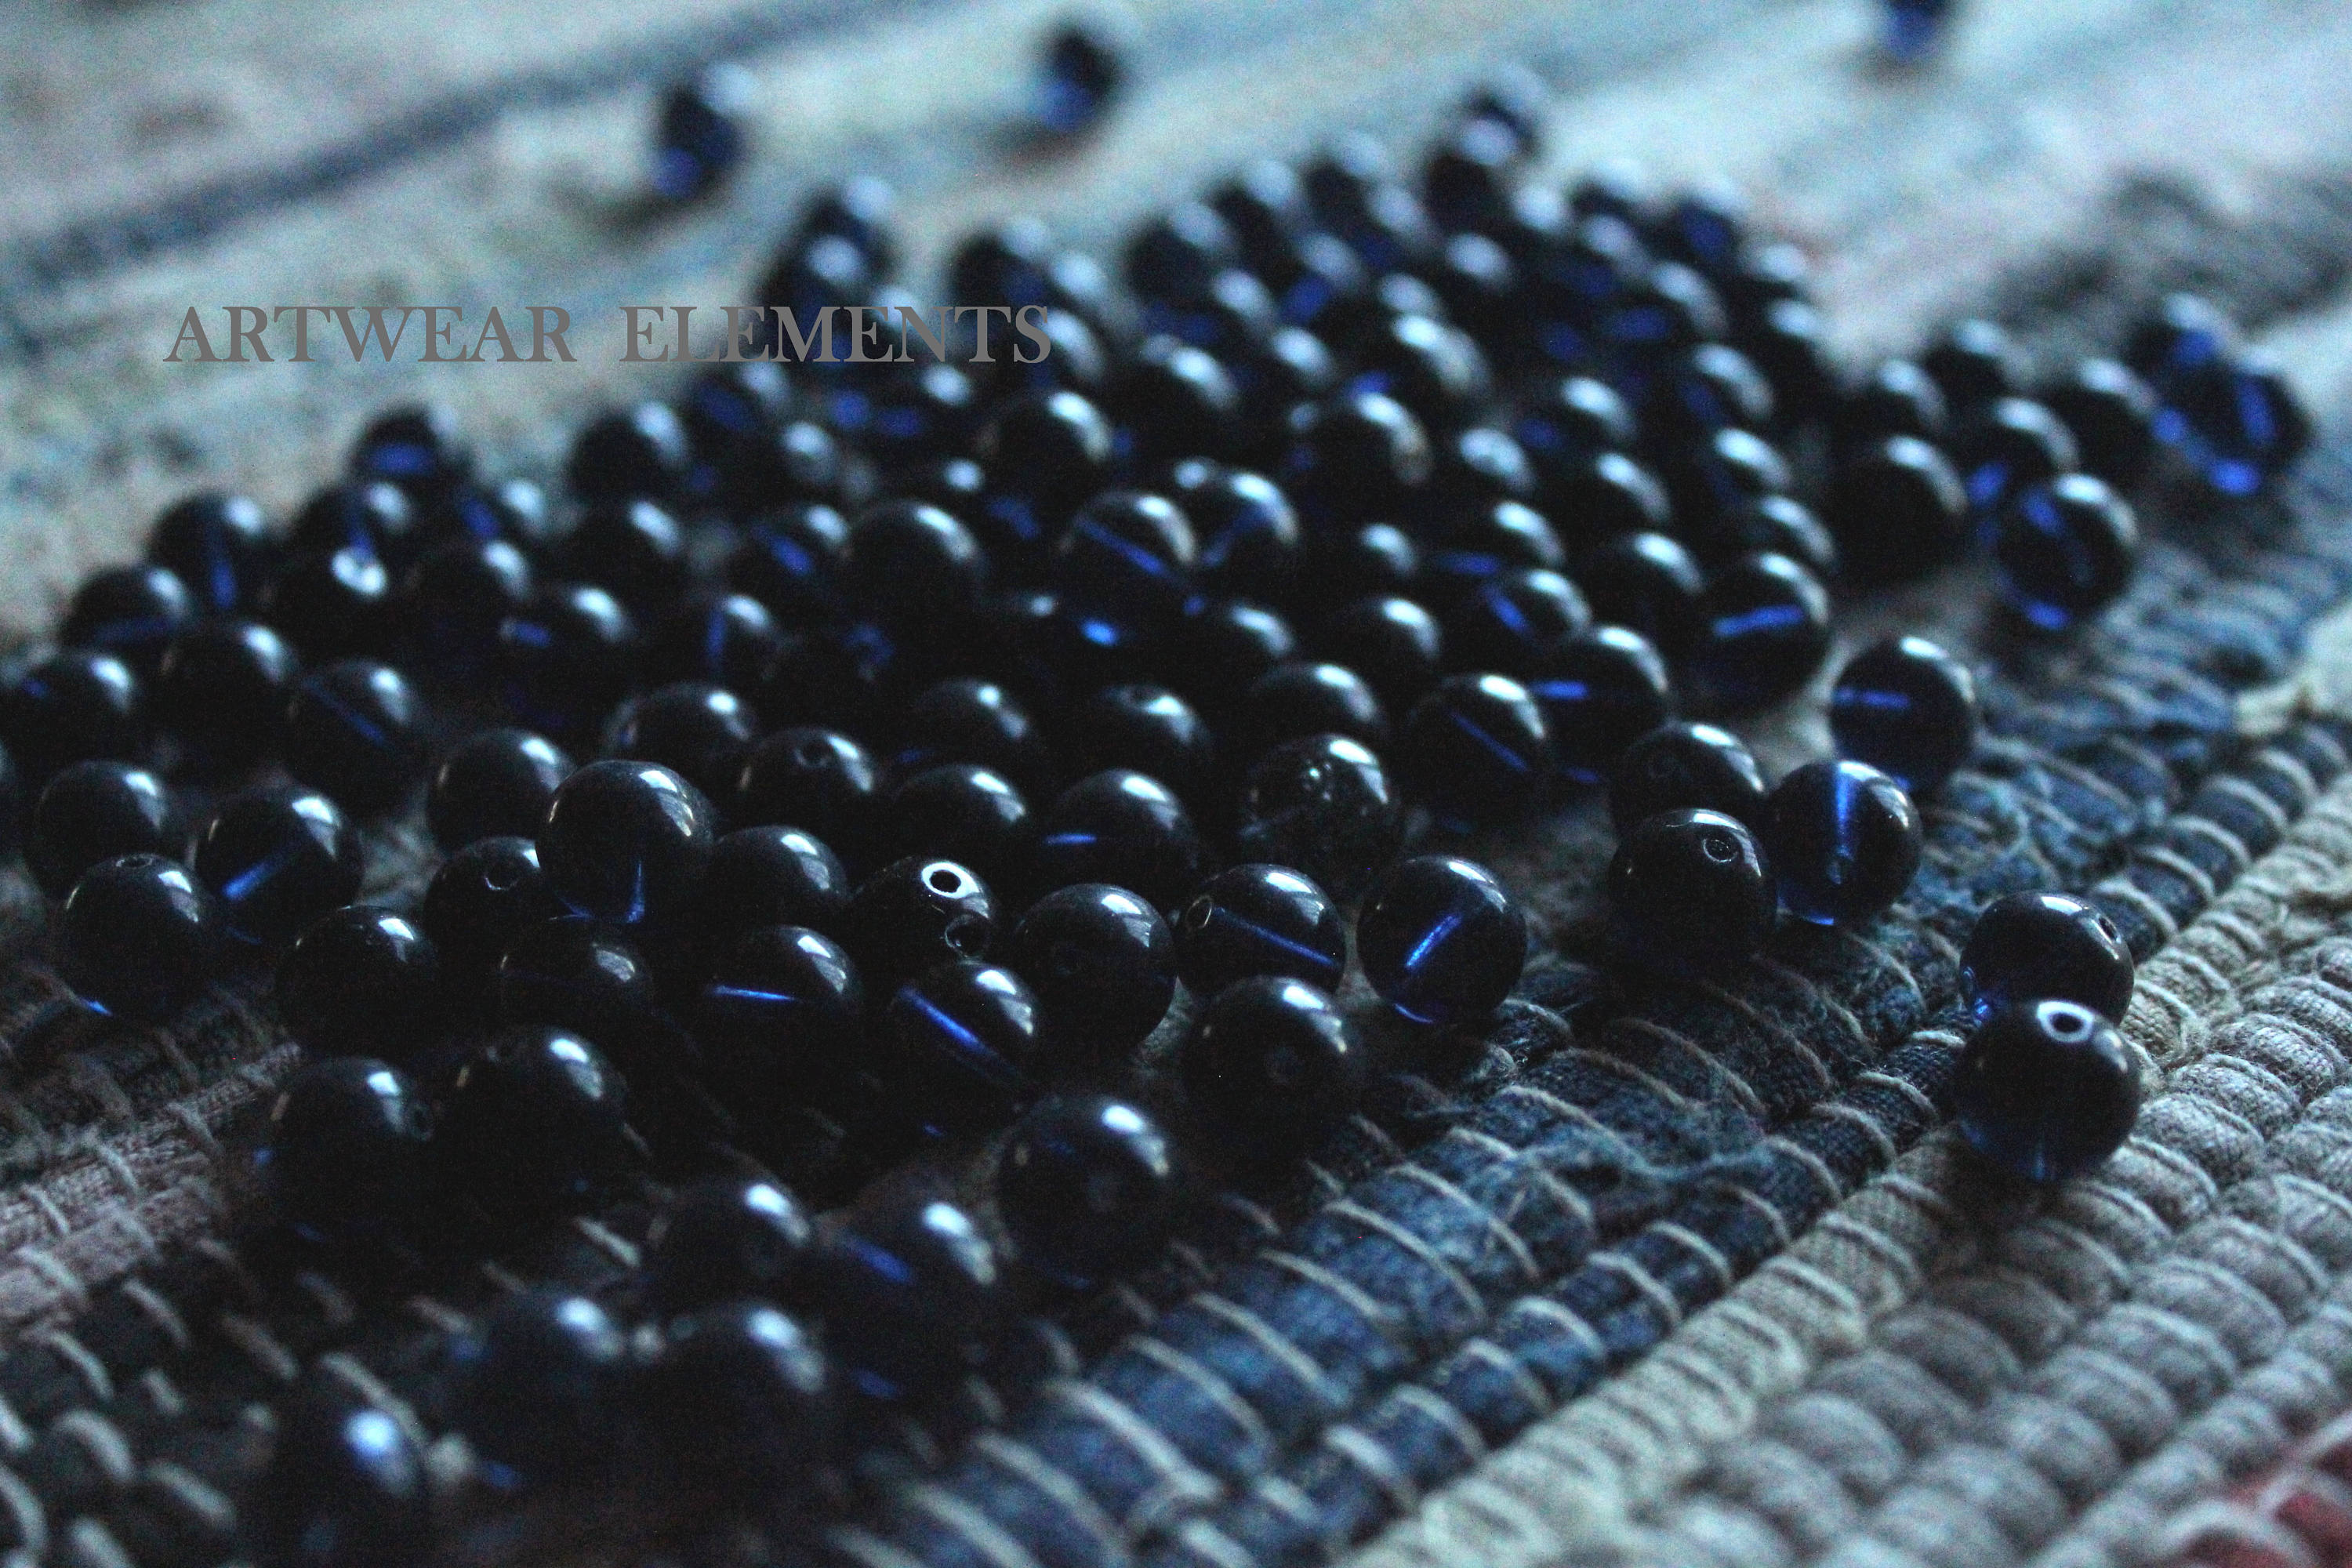 Blue Moon Beads, Glass 8mm Rondel, Clear AB (26), Sova Enterprises